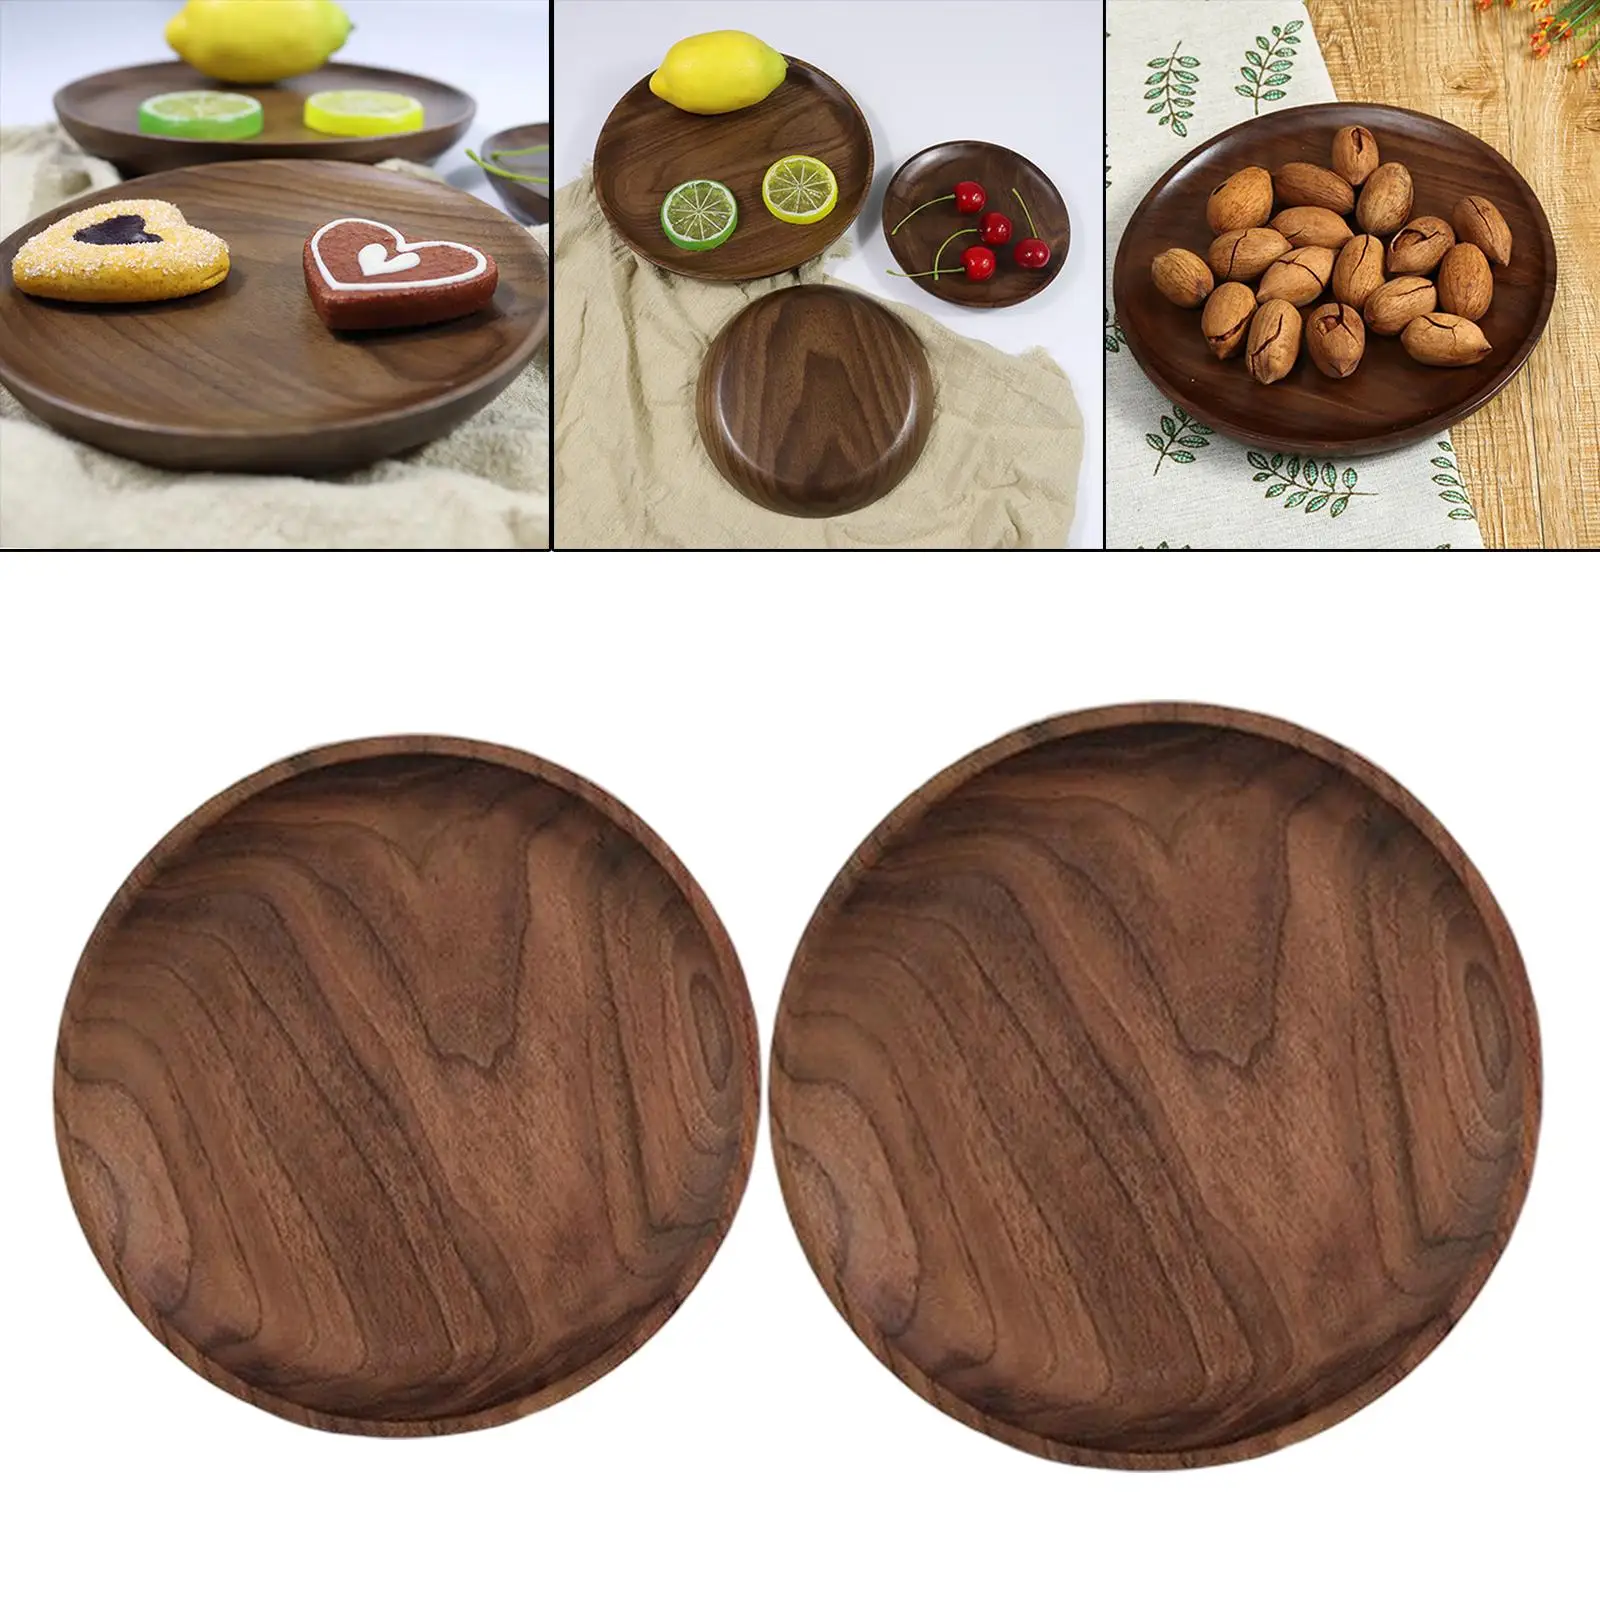 Black Walnut Serving Platter, Round Wood Tray, Wooden Serving Tray, Fruit, Bread, Salad Plate, Serving Board